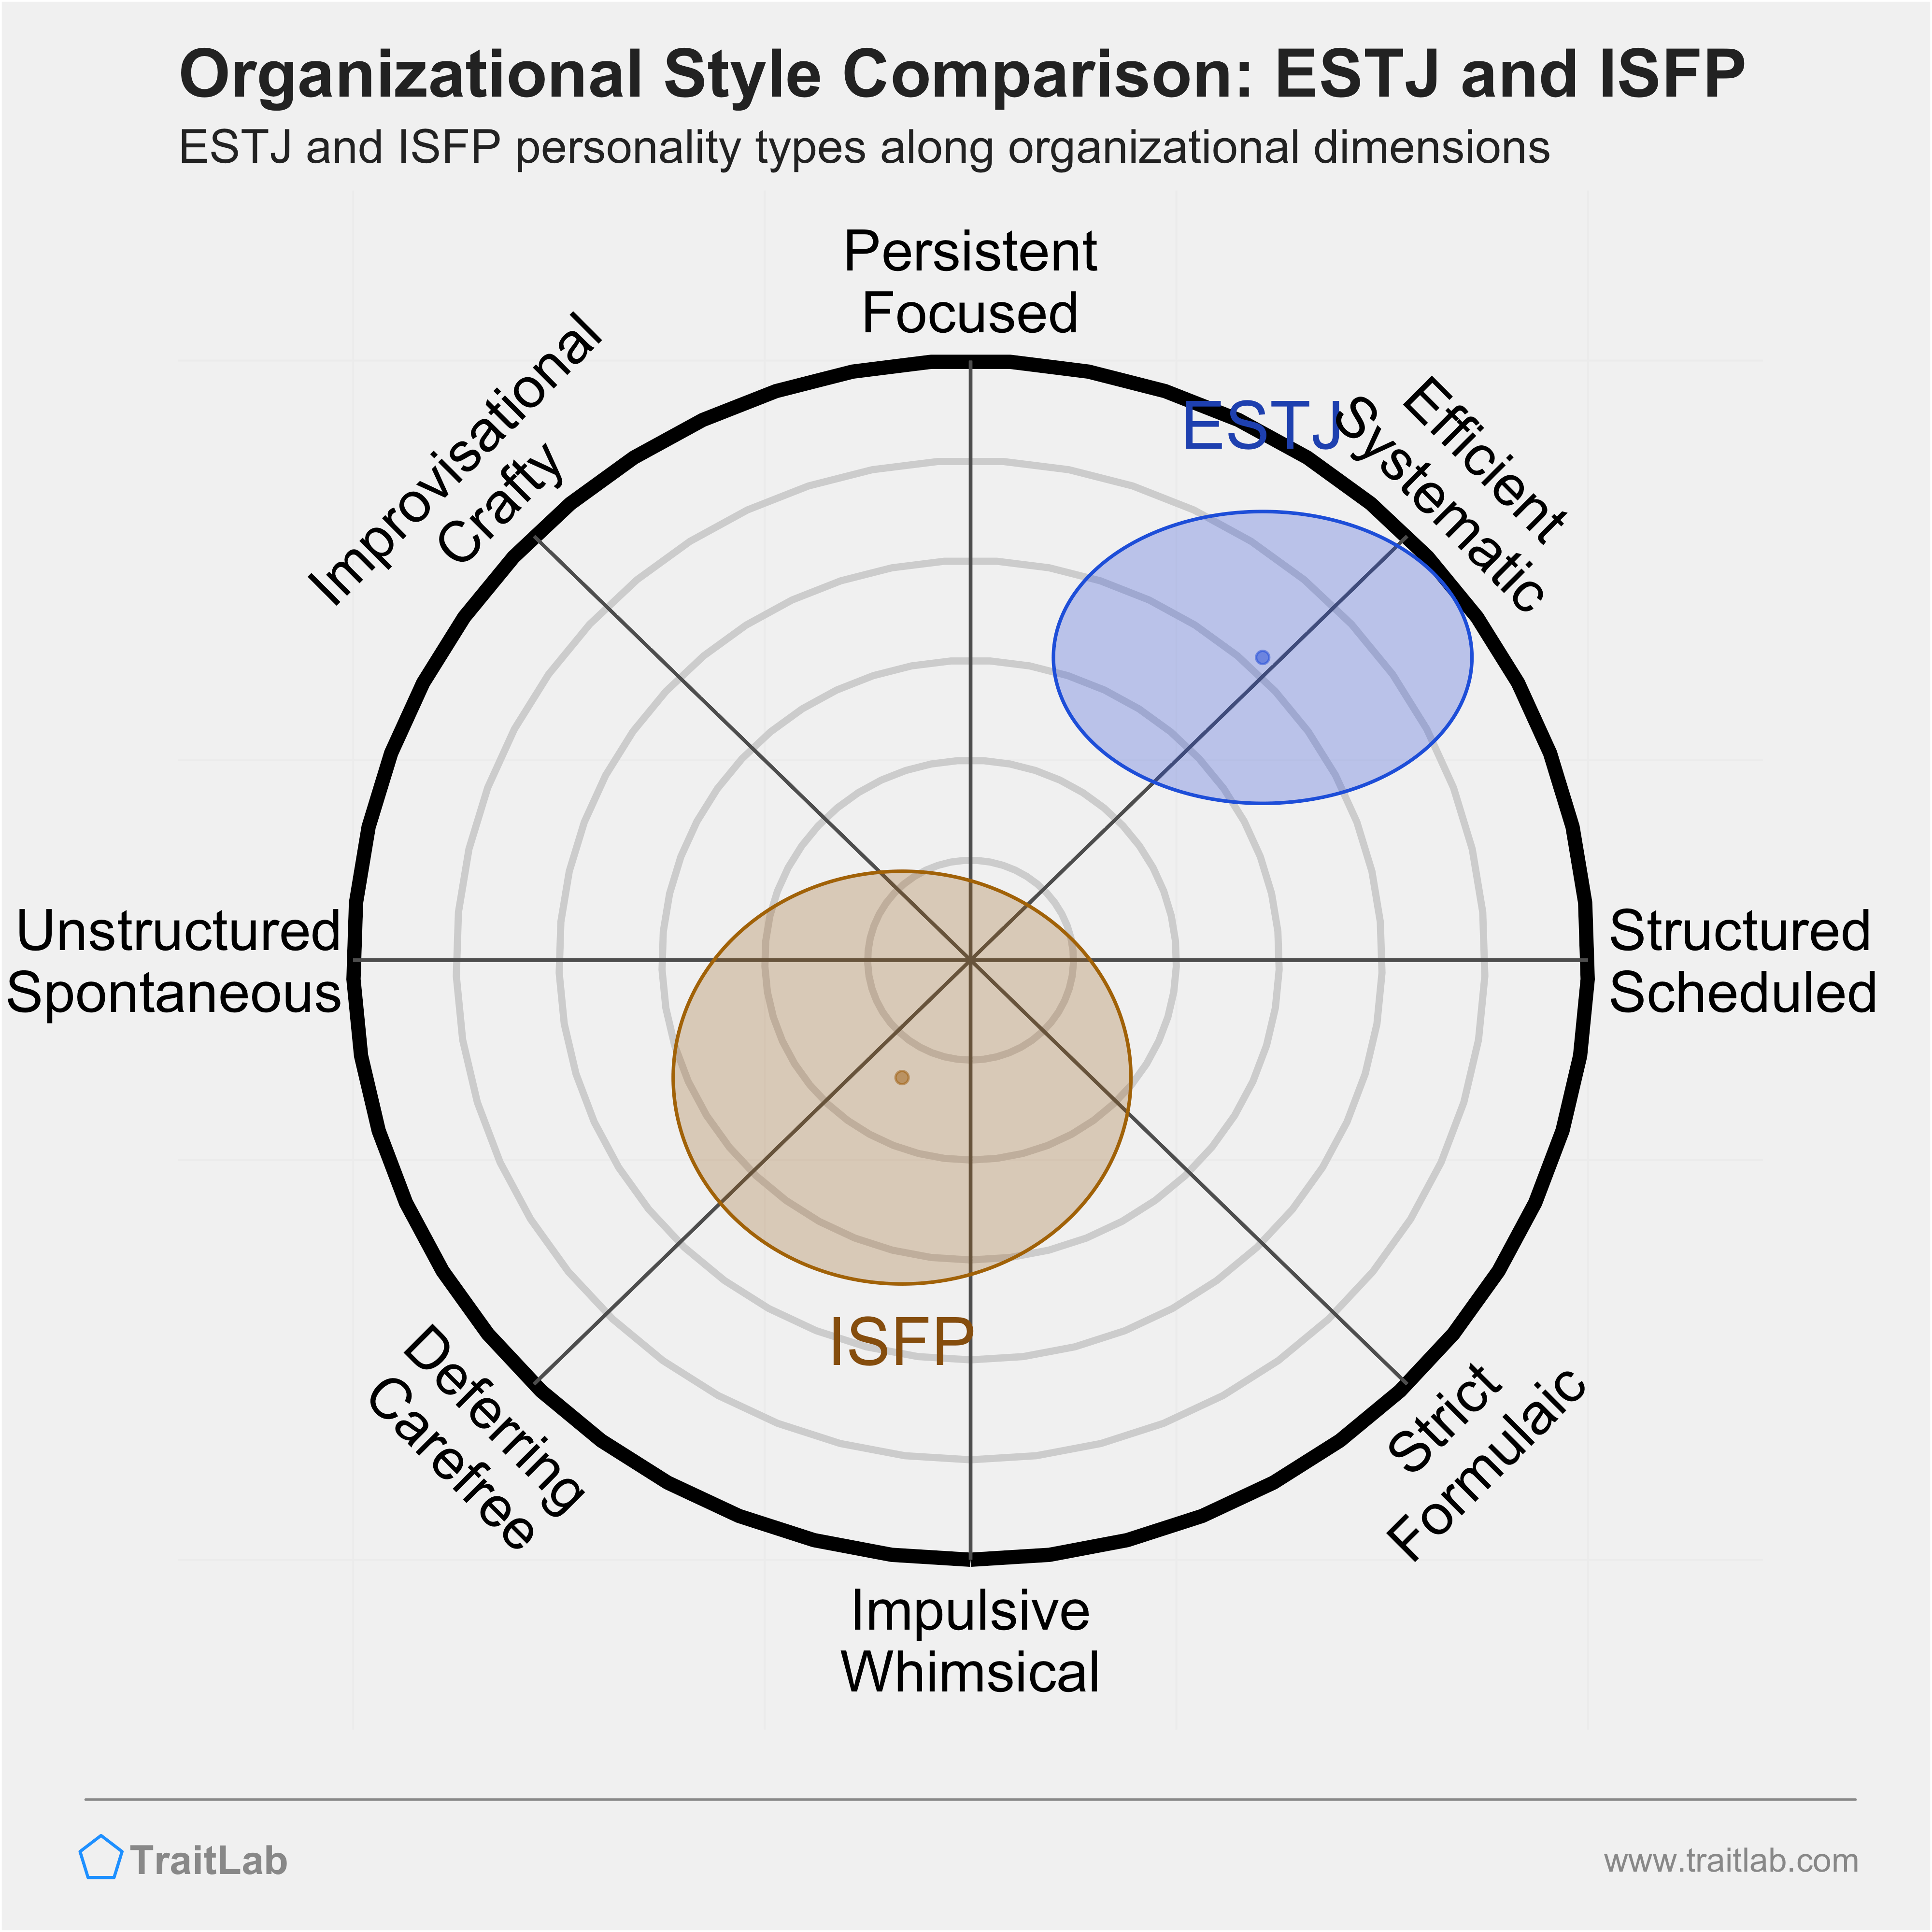 ESTJ and ISFP comparison across organizational dimensions